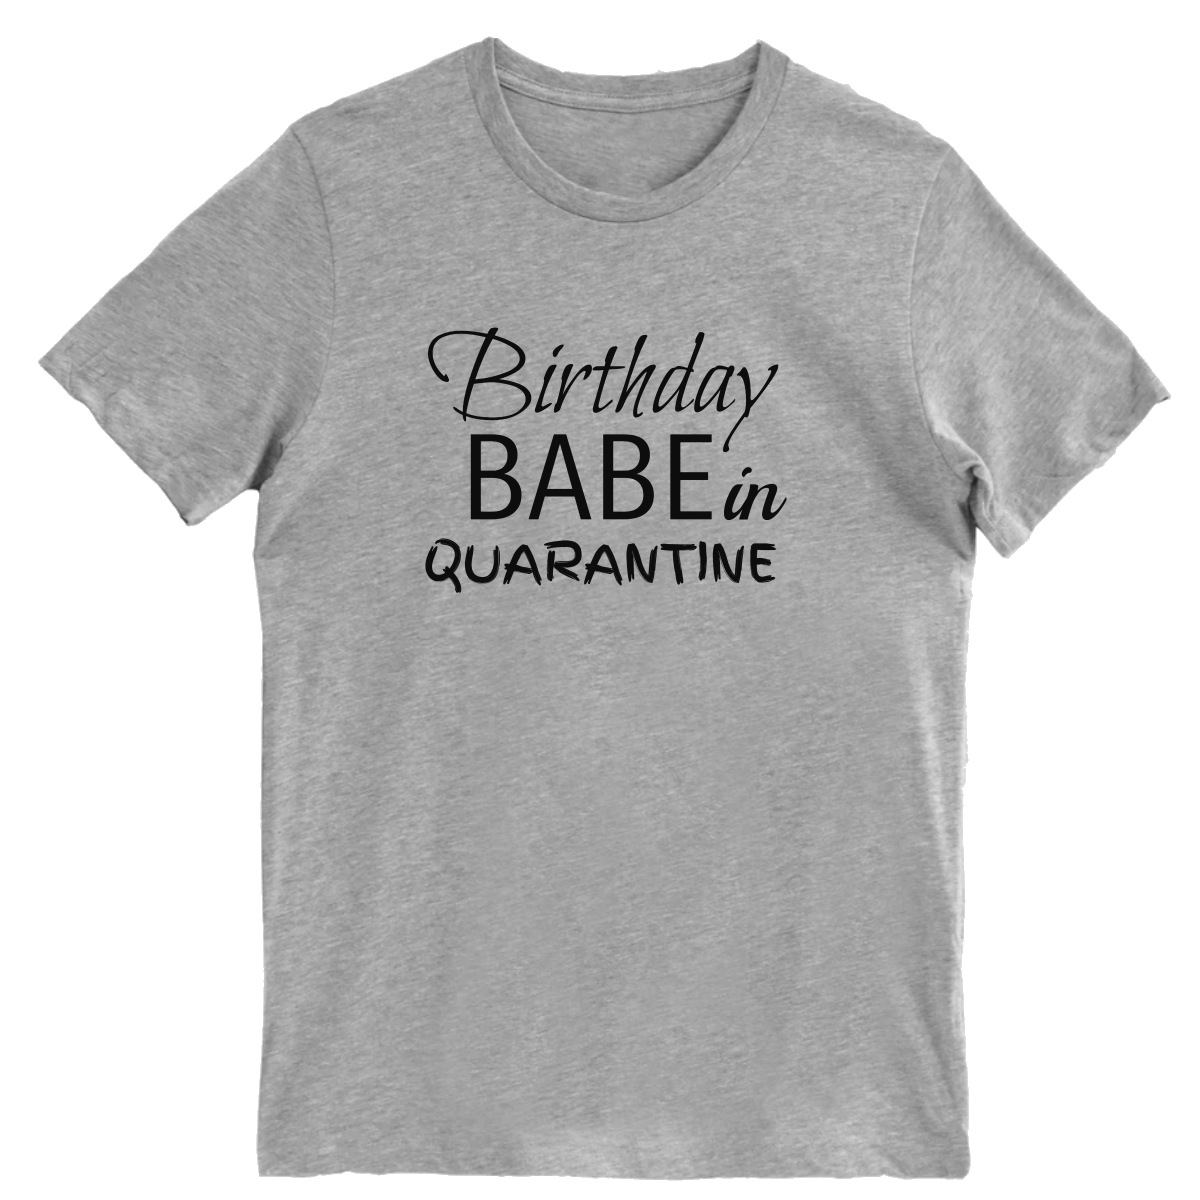 Birthday Babe in Quarantine Men's T-shirt | Gray